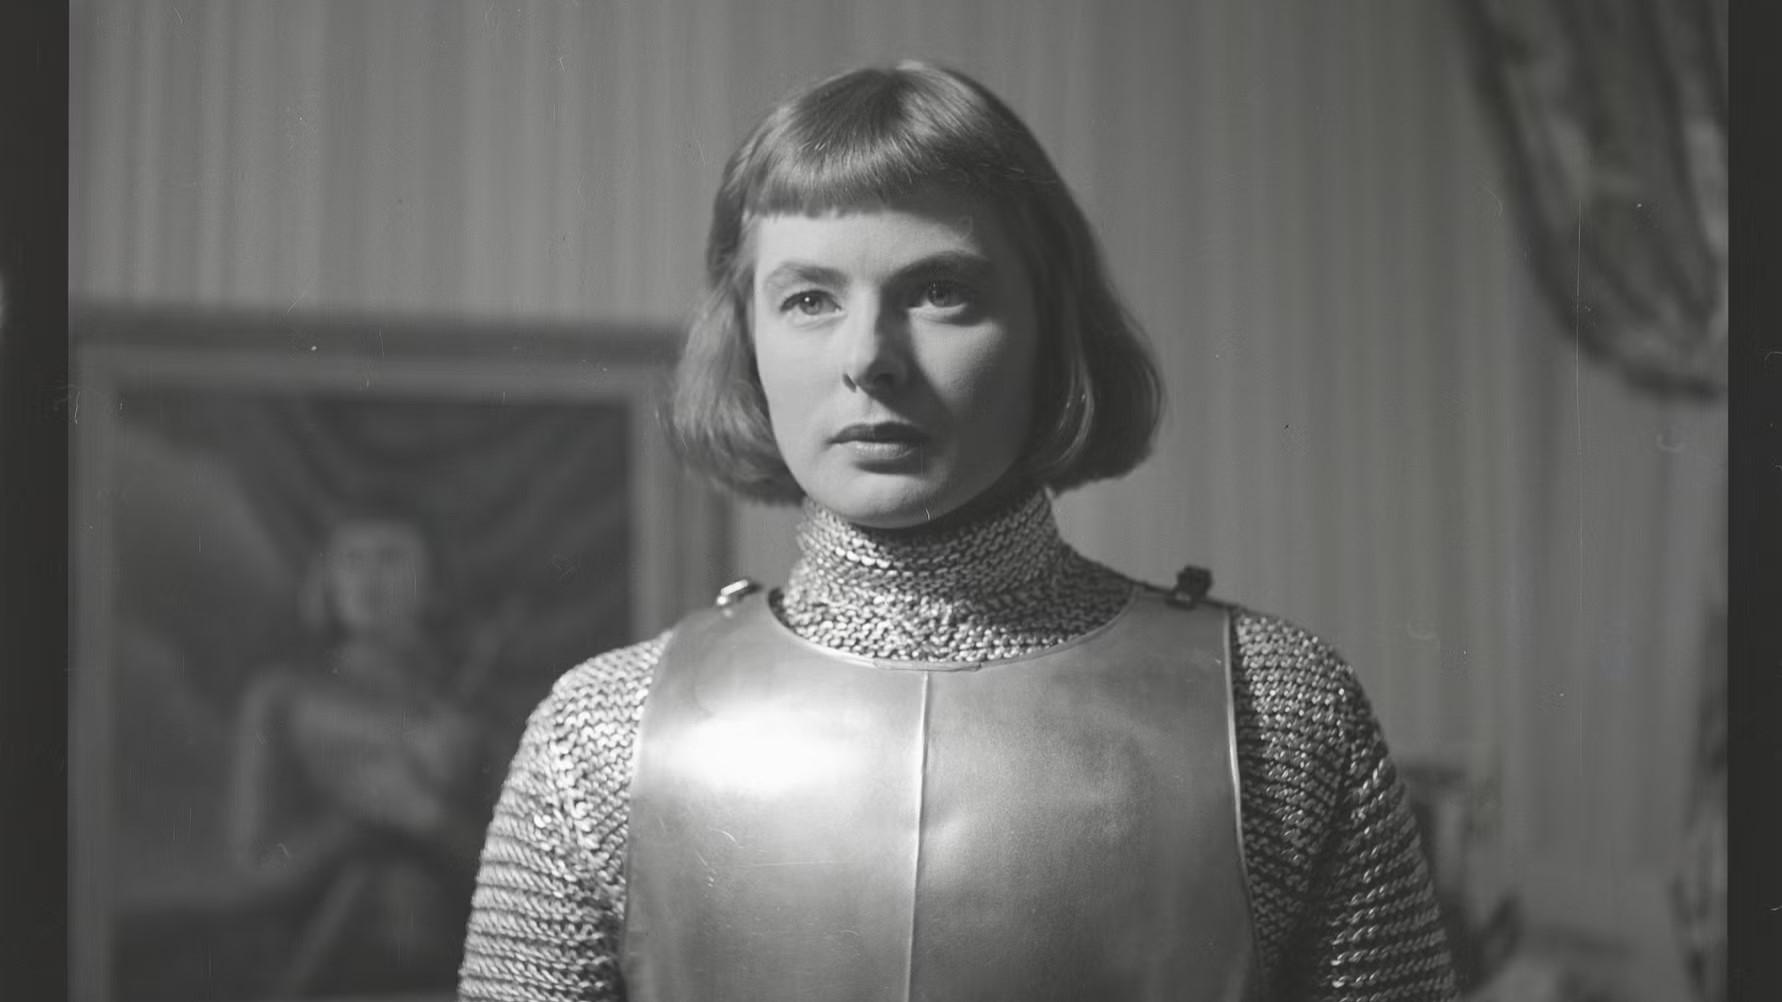 ”100 000 Bildminnen”, Ingrid Bergman år 1947. Foto: KW Gullers, Nordiska museet